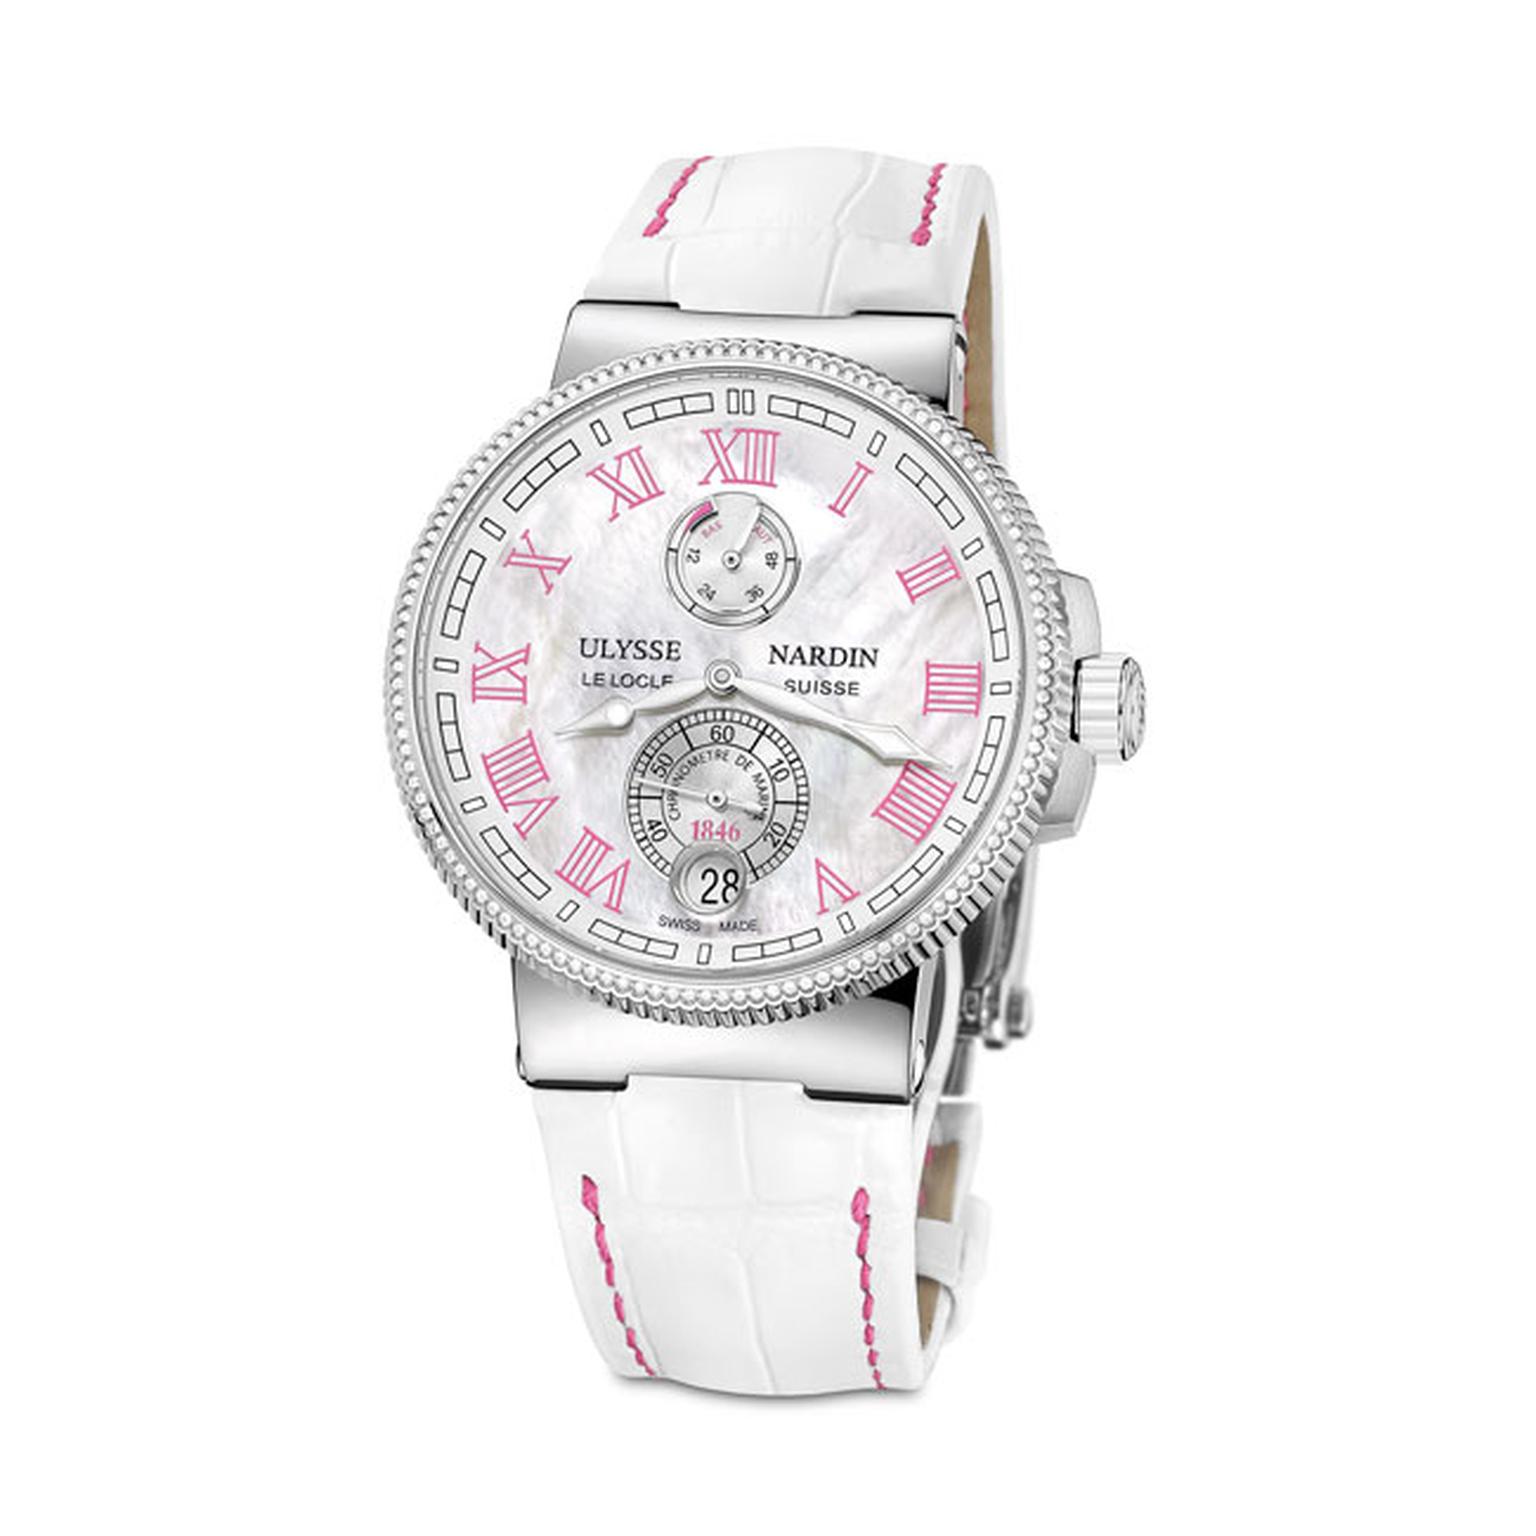 Ulysse Nardin Marine Chronometer 43mm ladies watch in pink_main